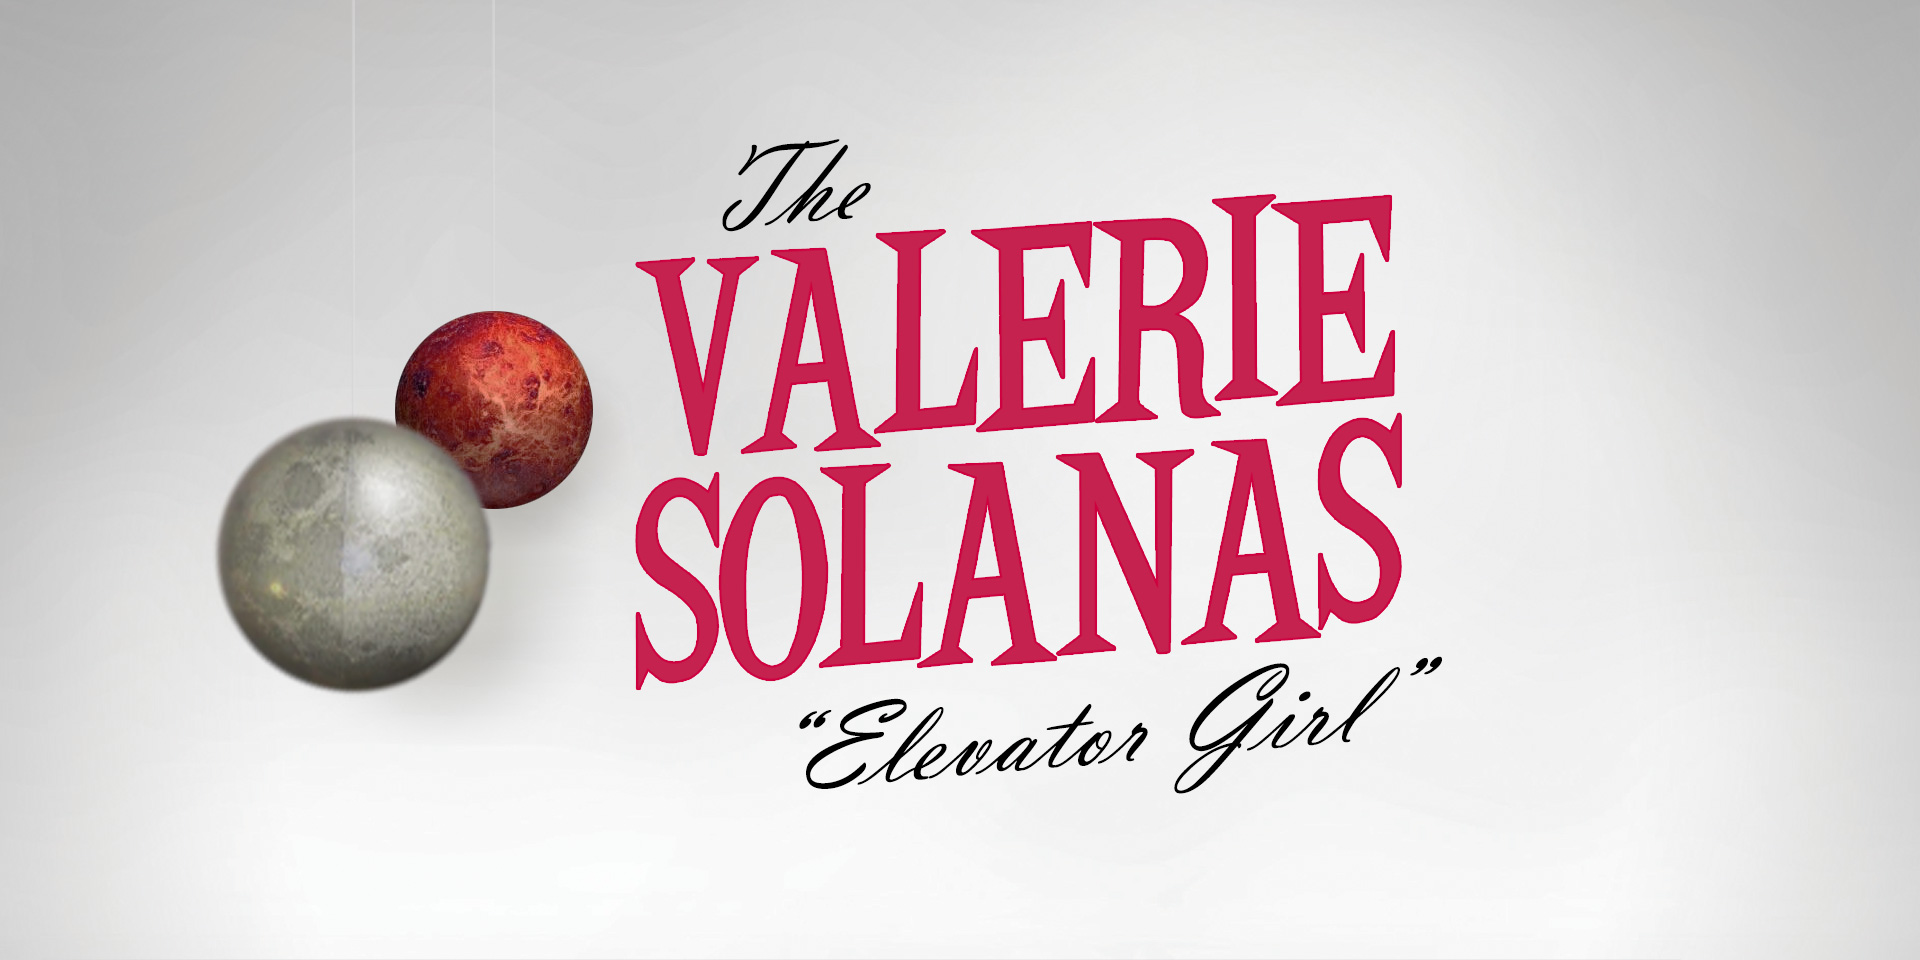 The Valerie Solanas